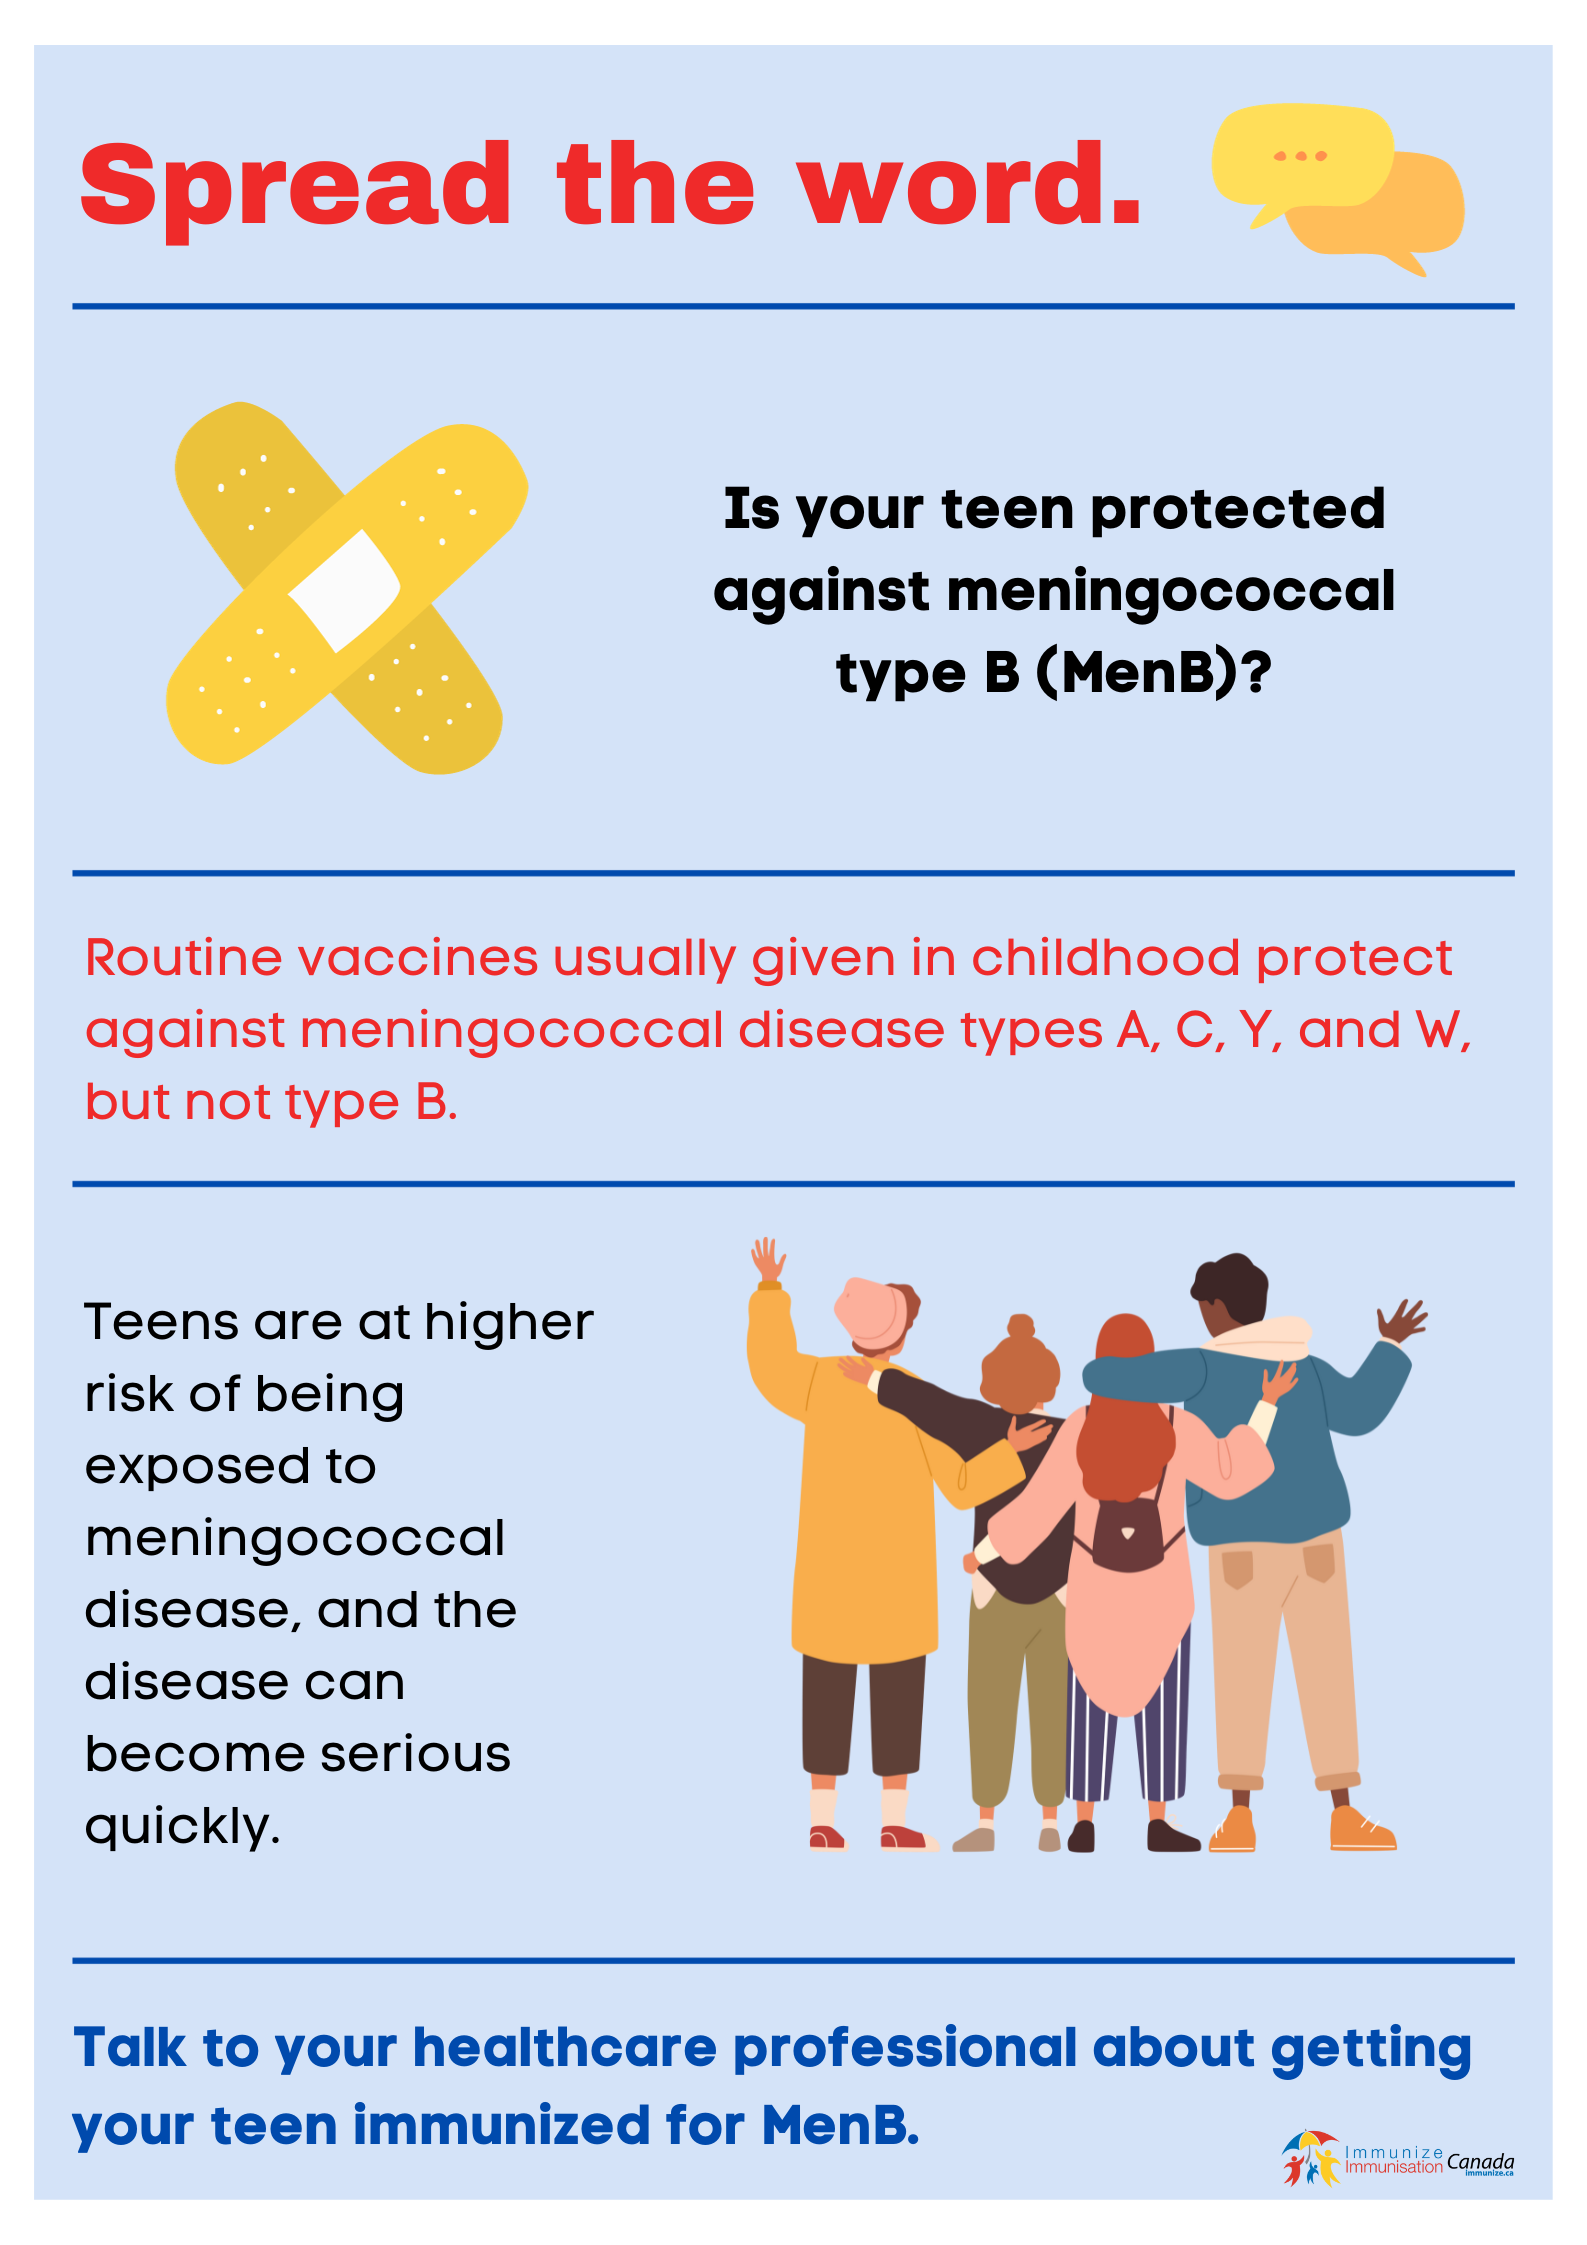 Spread the word - meningococcal B immunization - poster 1